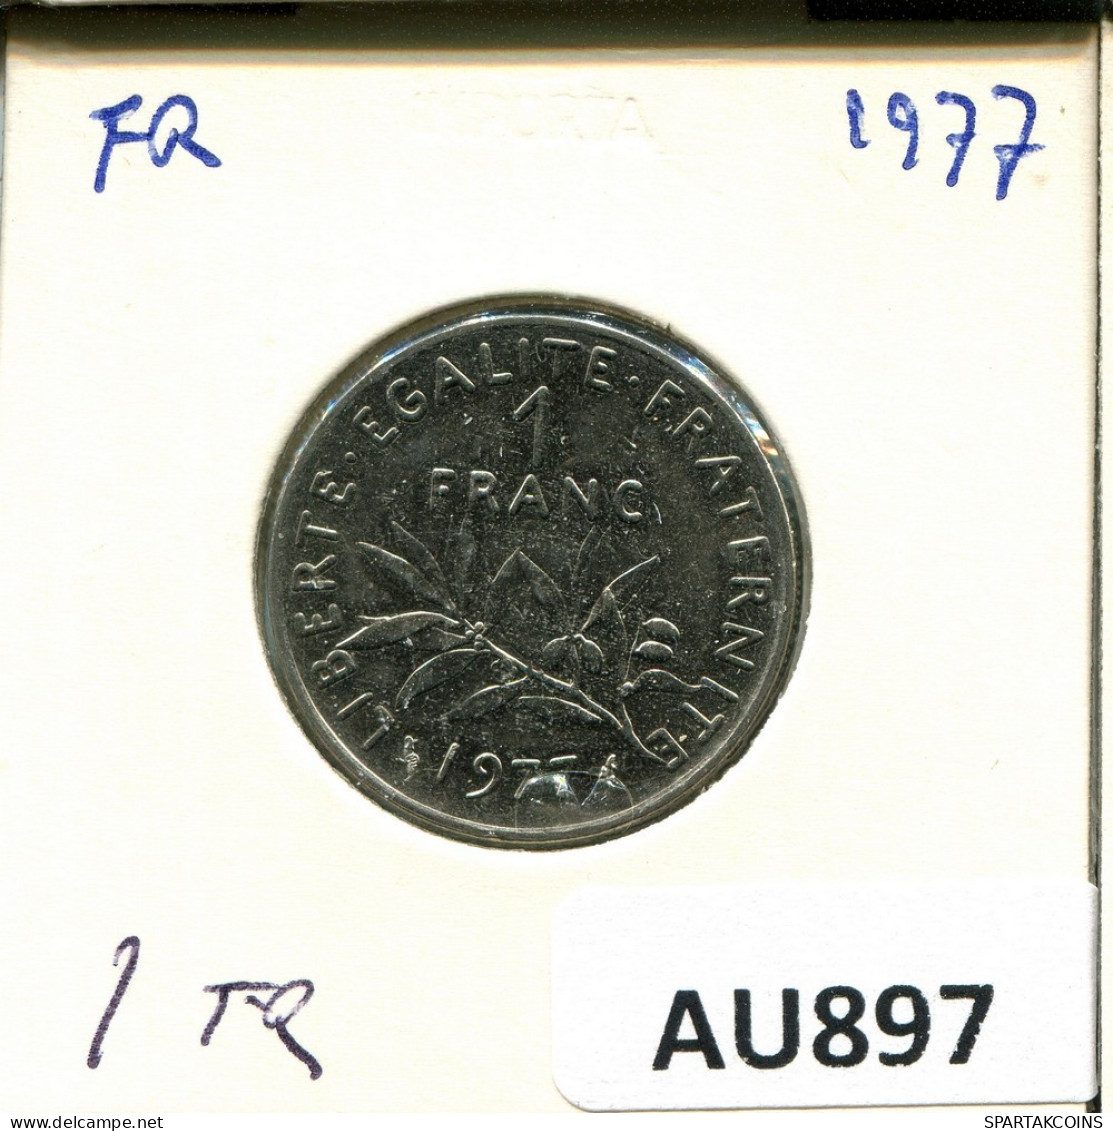 1 FRANC 1977 FRANCE Coin #AU897.U.A - 1 Franc